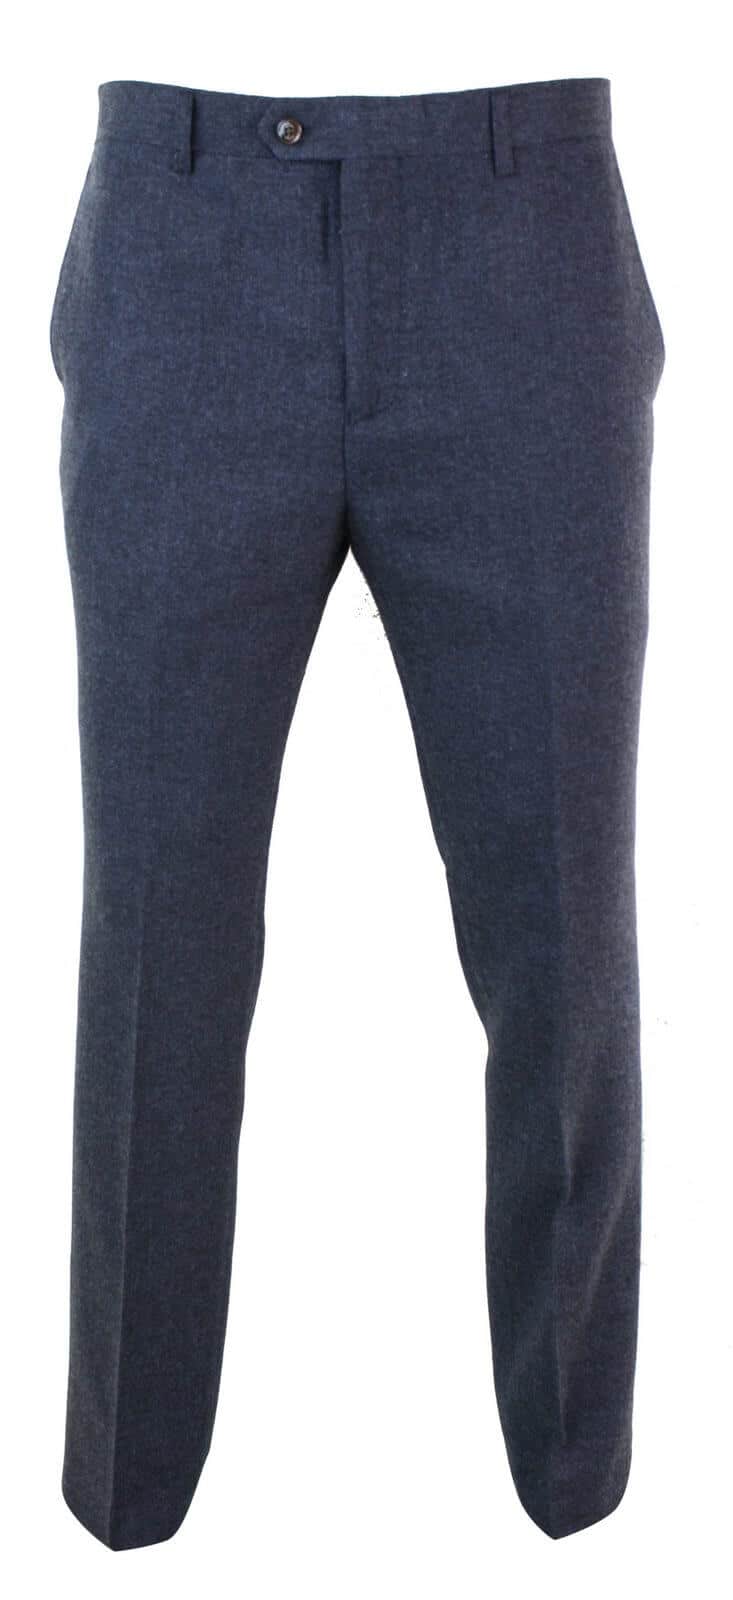 Cavani Martez Tweed Navy Men's Slim Fit Trousers